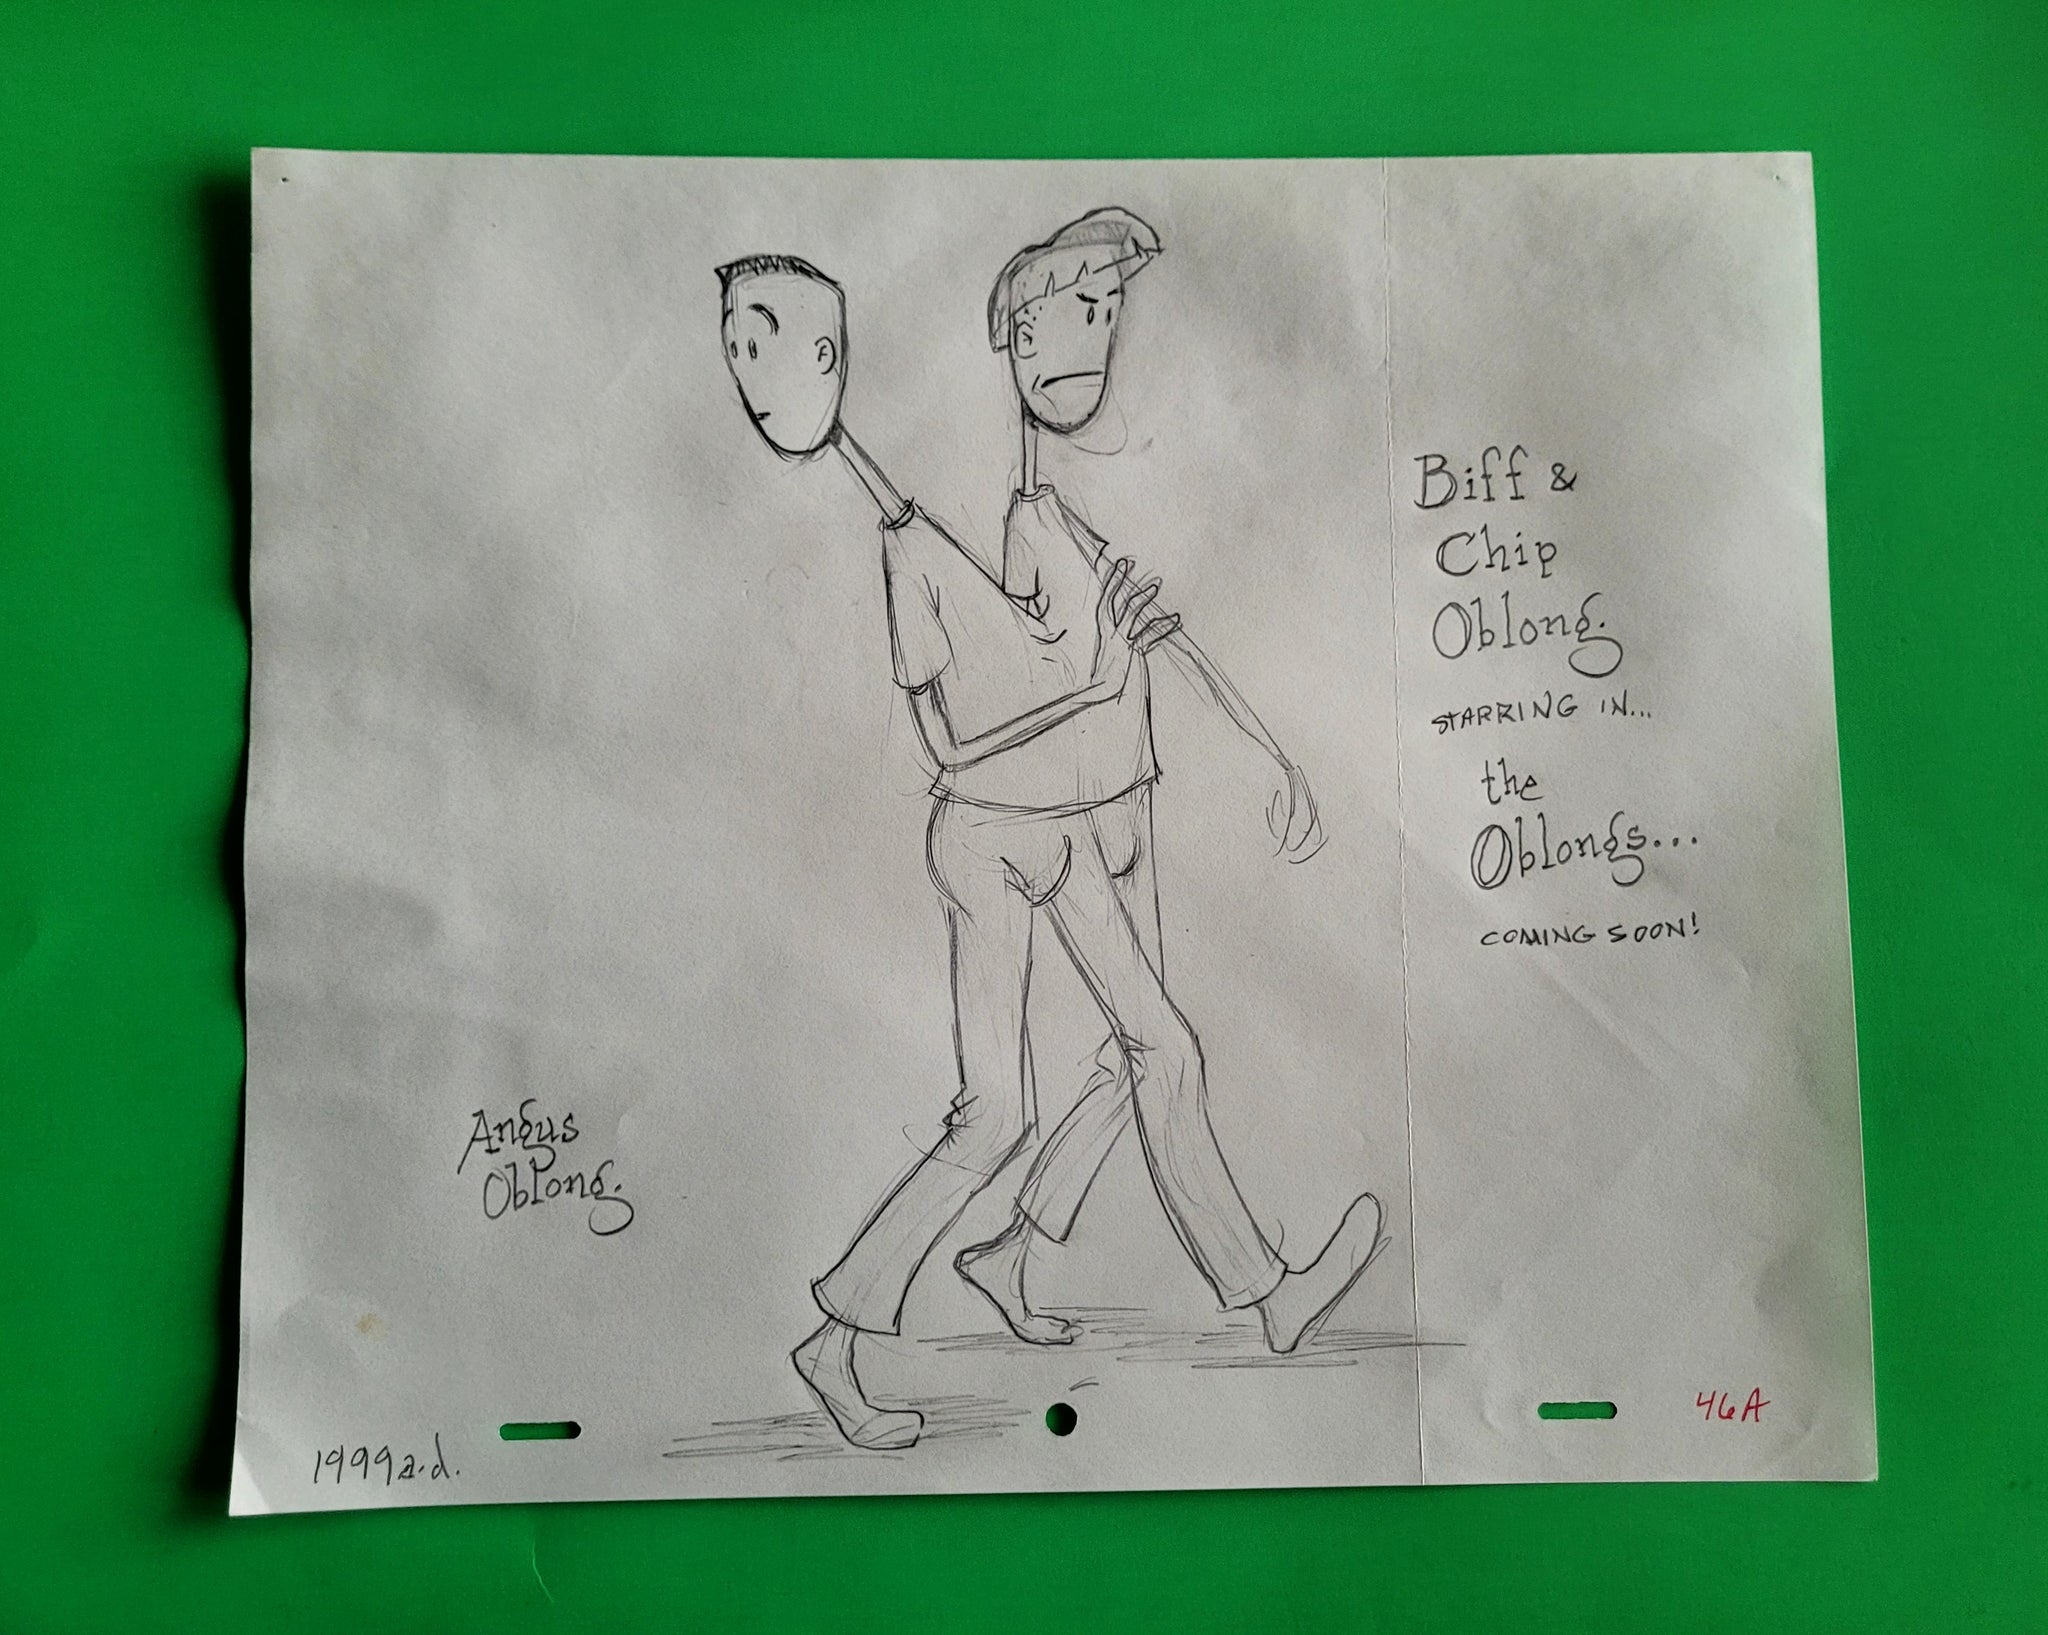 Biff & Chip Oblong Walking Development Art.